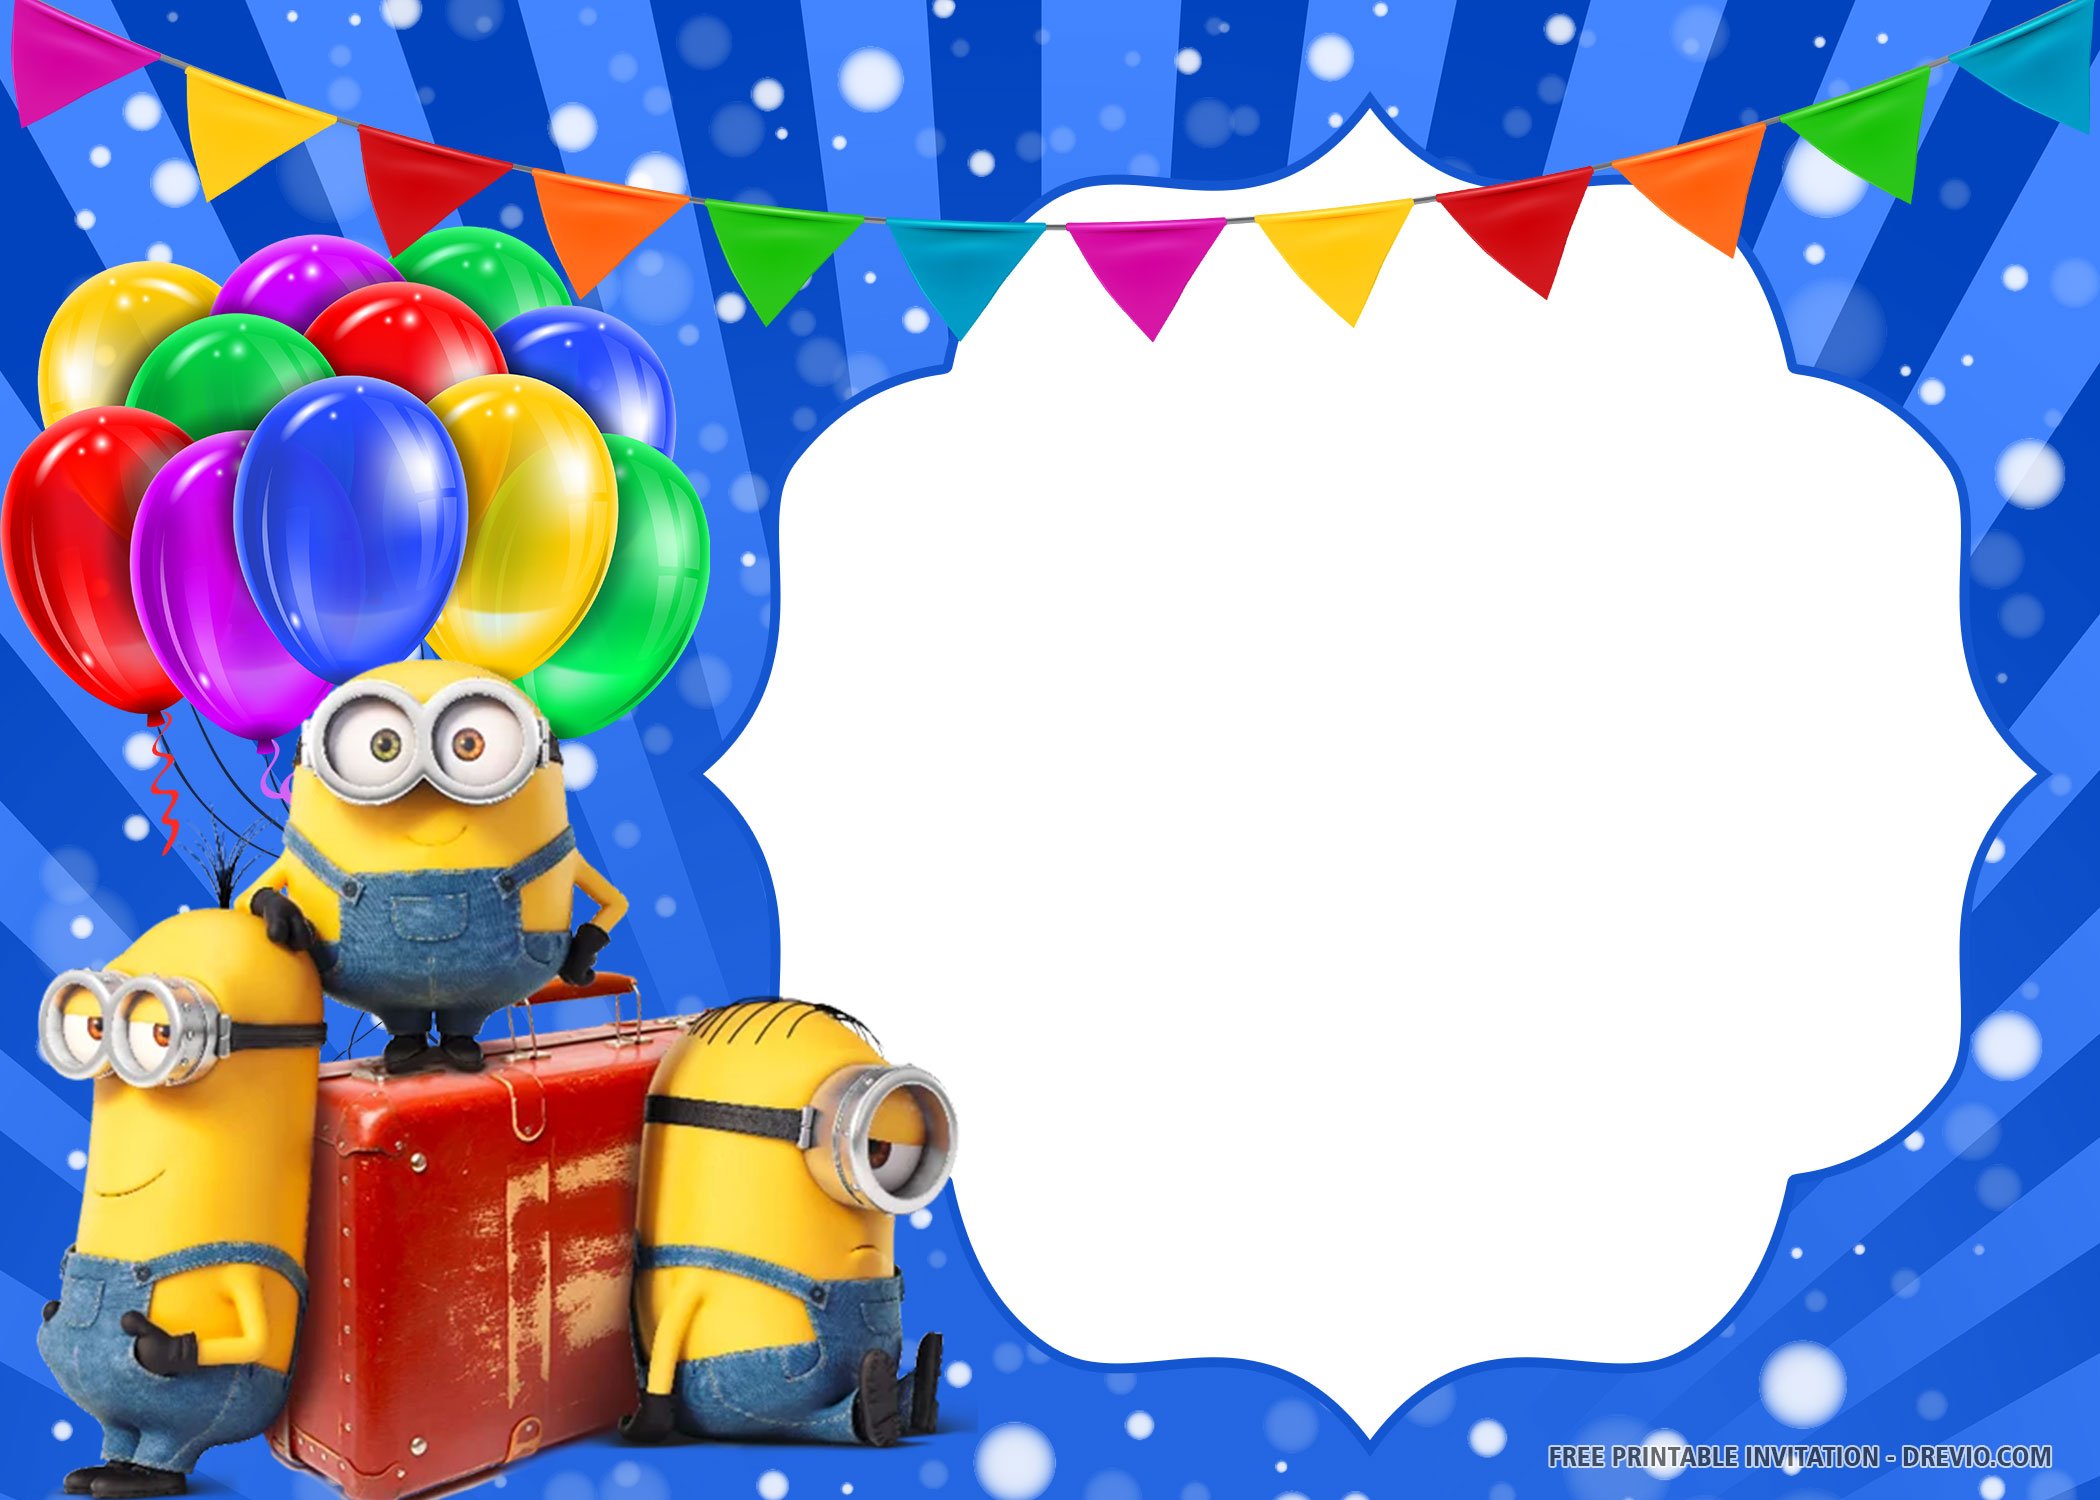 minion birthday invitation templates free download